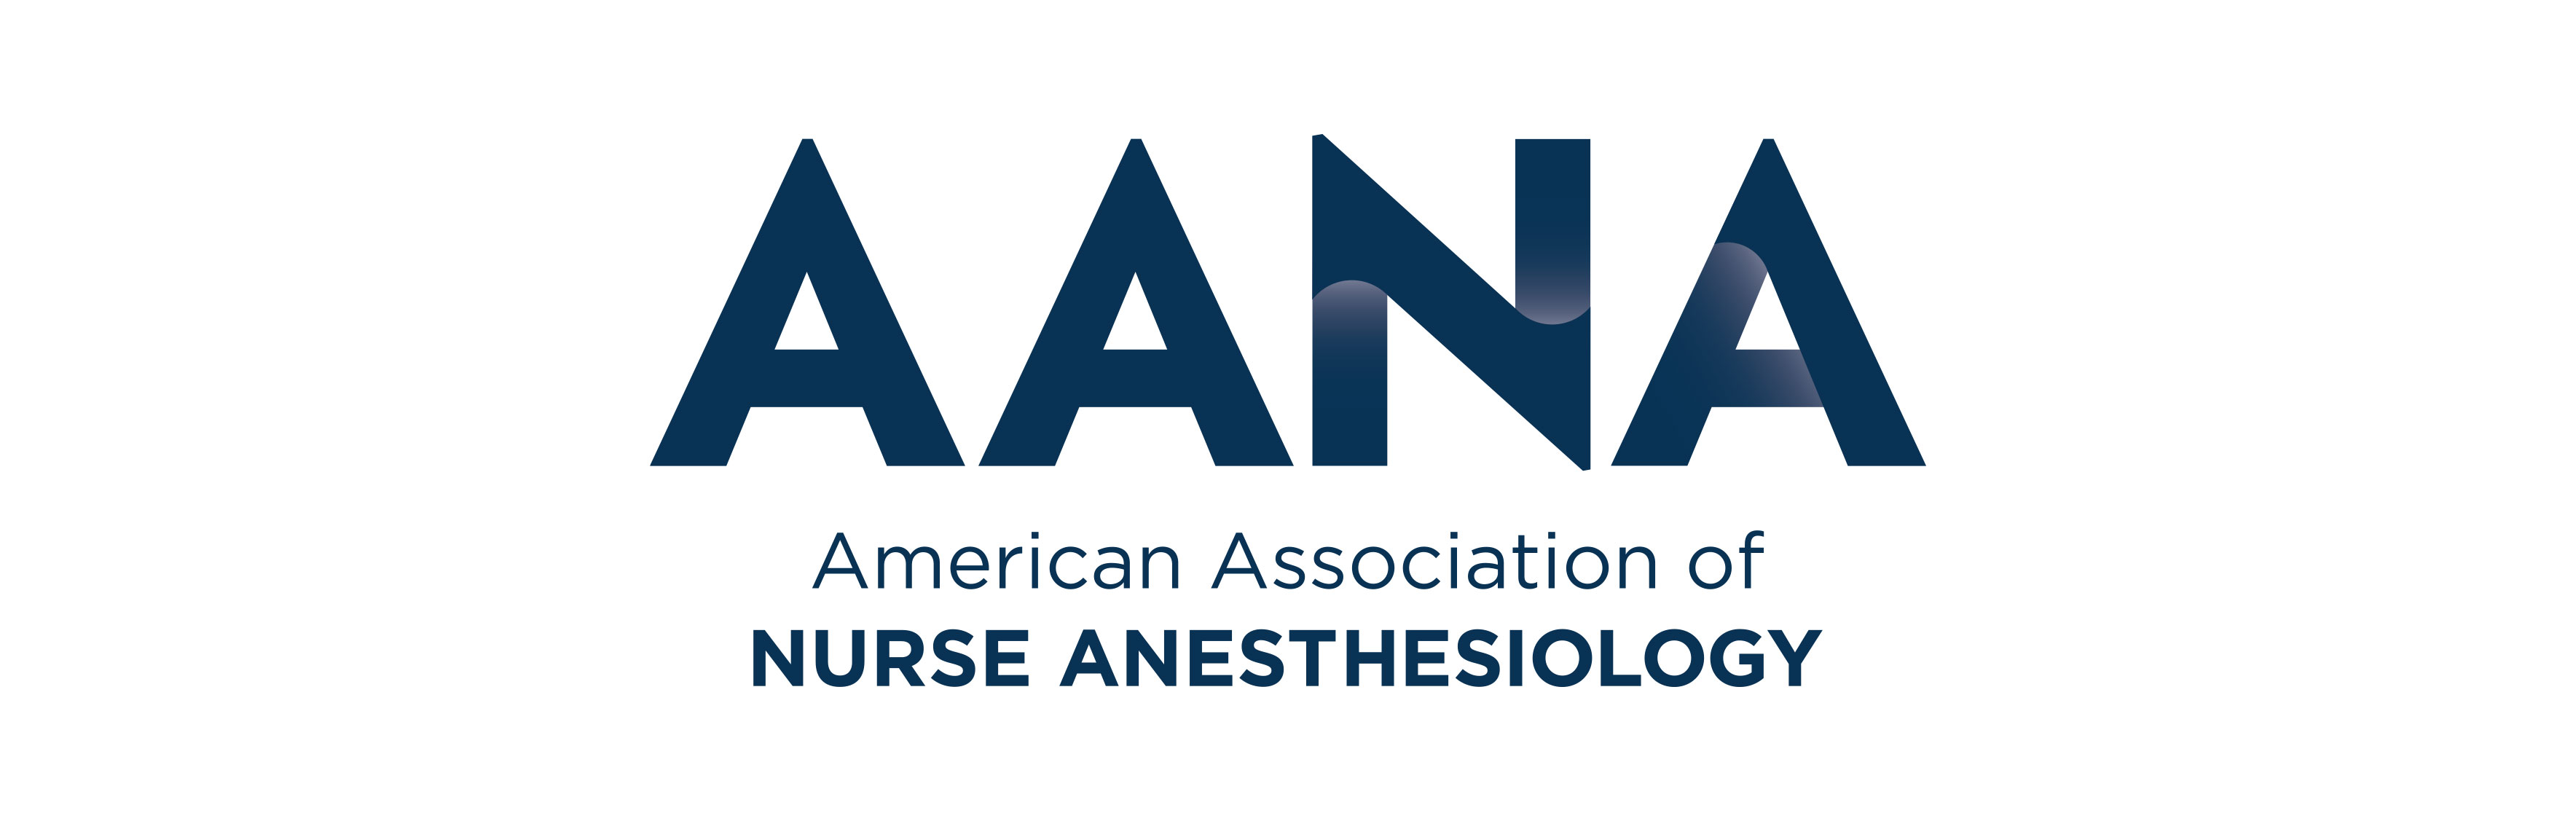 AANA logo 